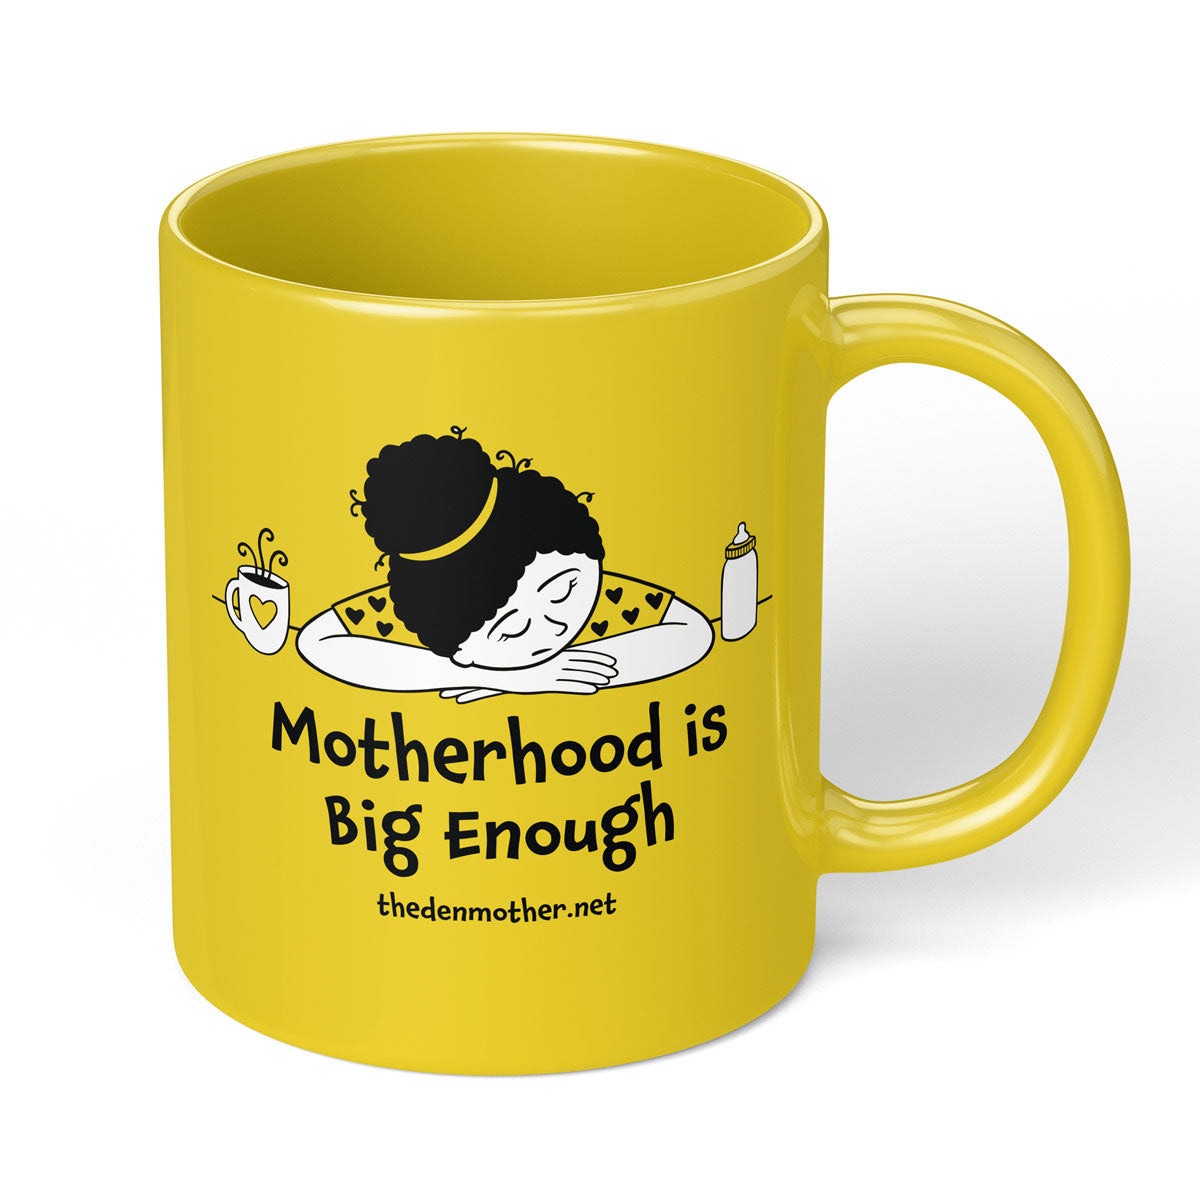 Motherhood is Big Enough Mug